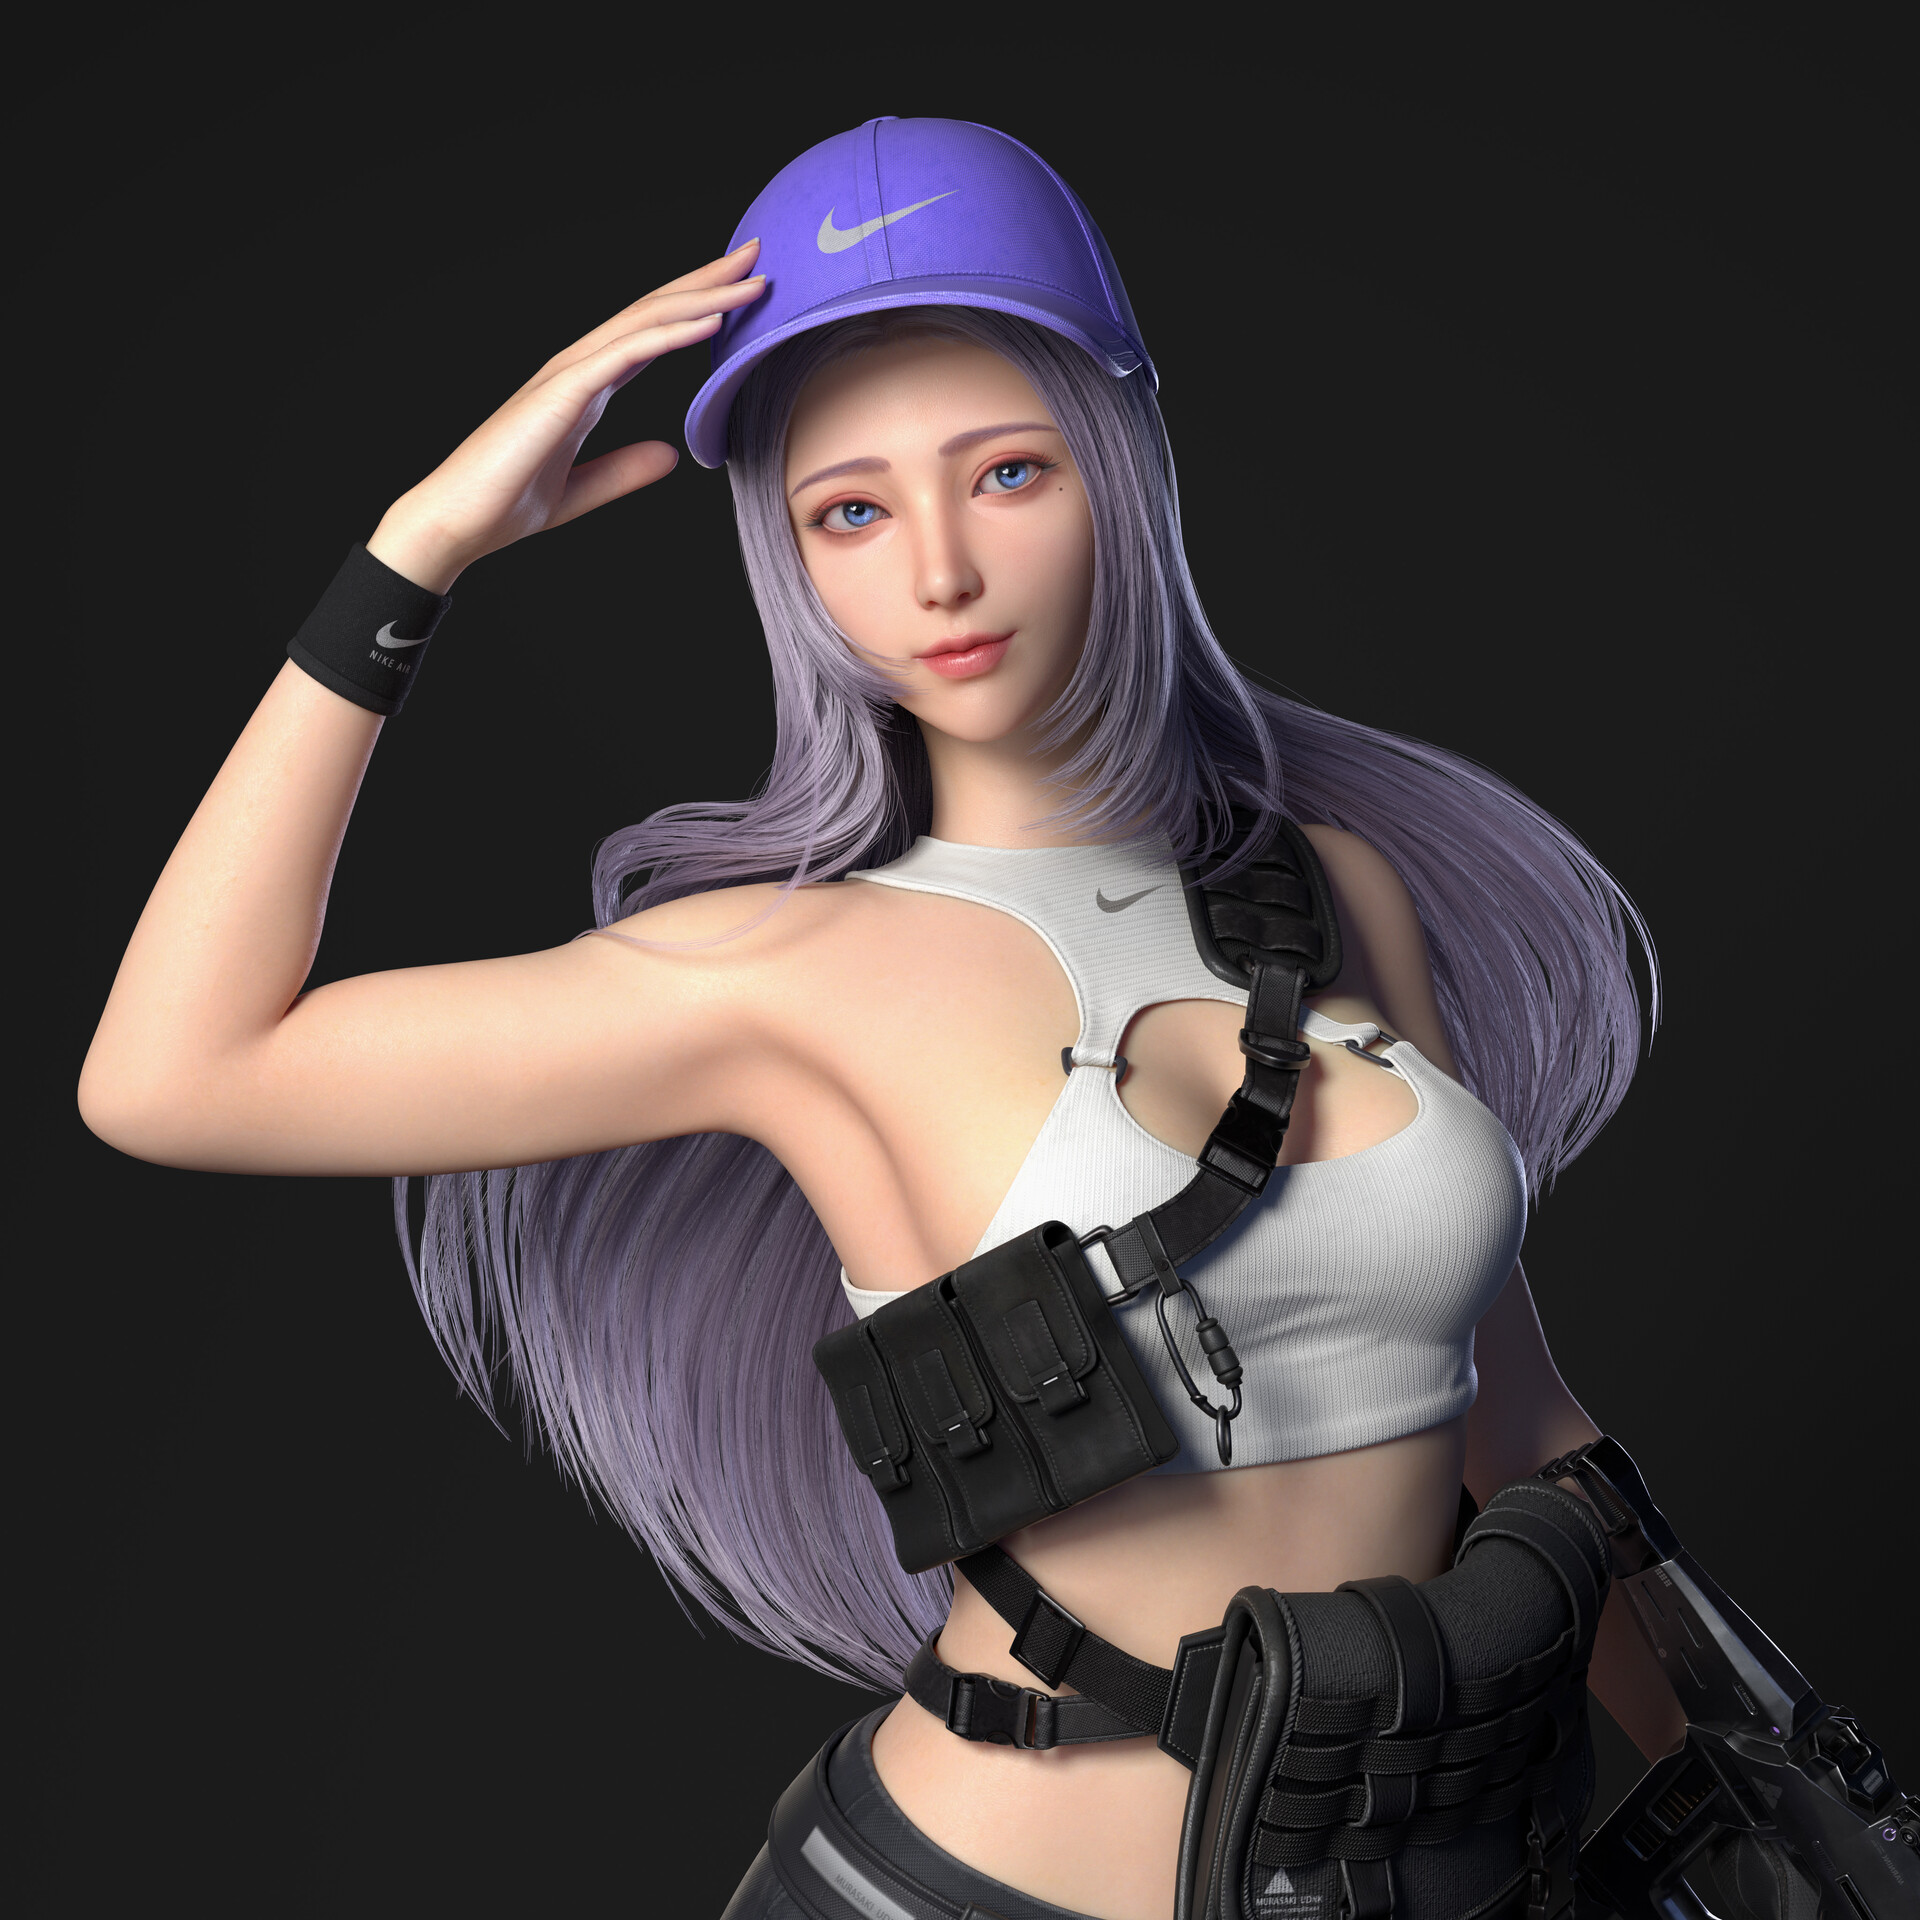 General 1920x1920 Owen Q CGI women looking away baseball cap blue hair tank top holster simple background